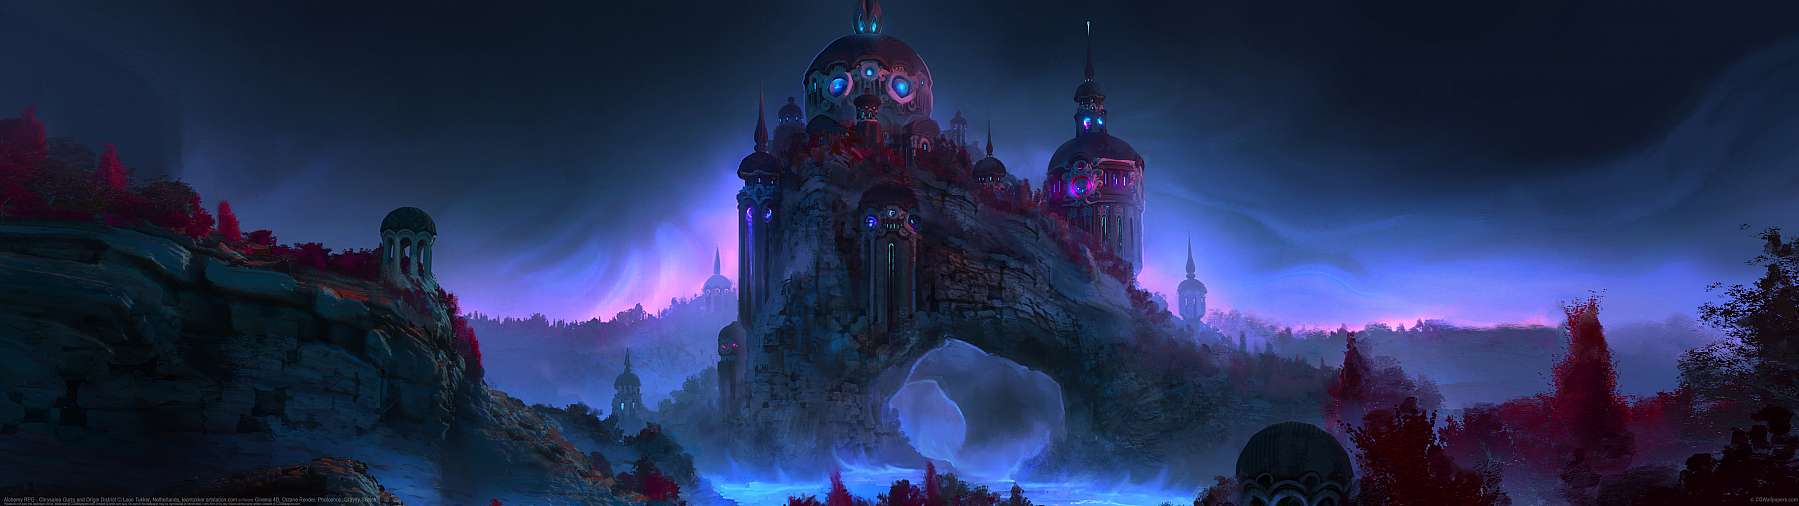 Alchemy RPG - Chrysalea Ourro and Origin District ultrawide wallpaper